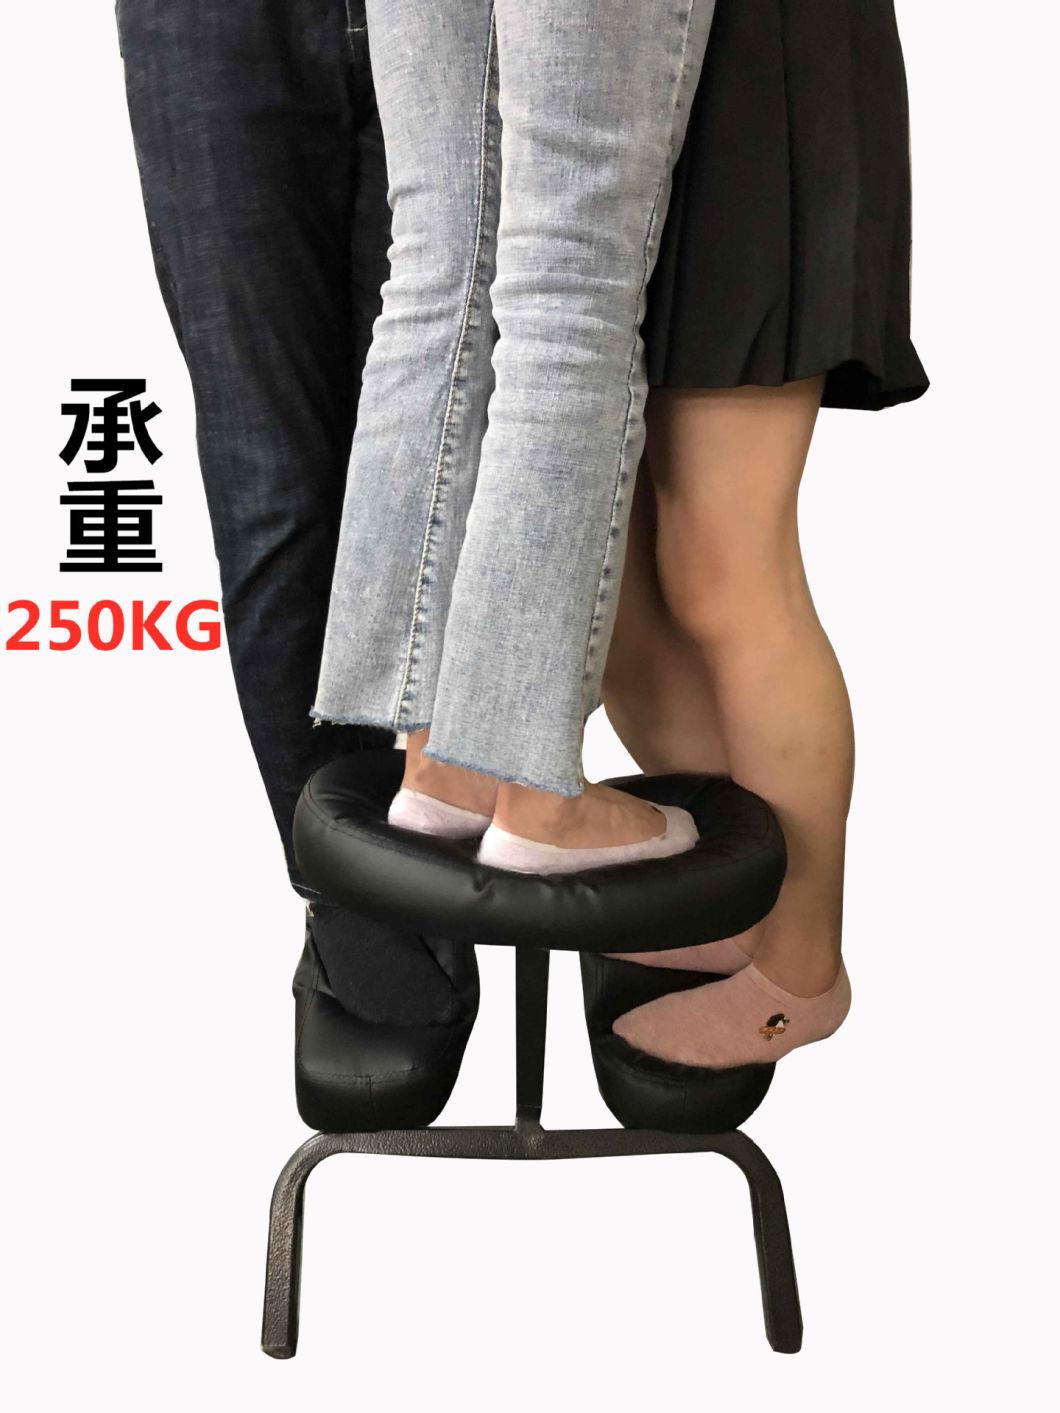 Portable Tattoo Foldable High Quality Massage Beauty Salon Bed Chair Beauty Salon Chairs (XC-6611)